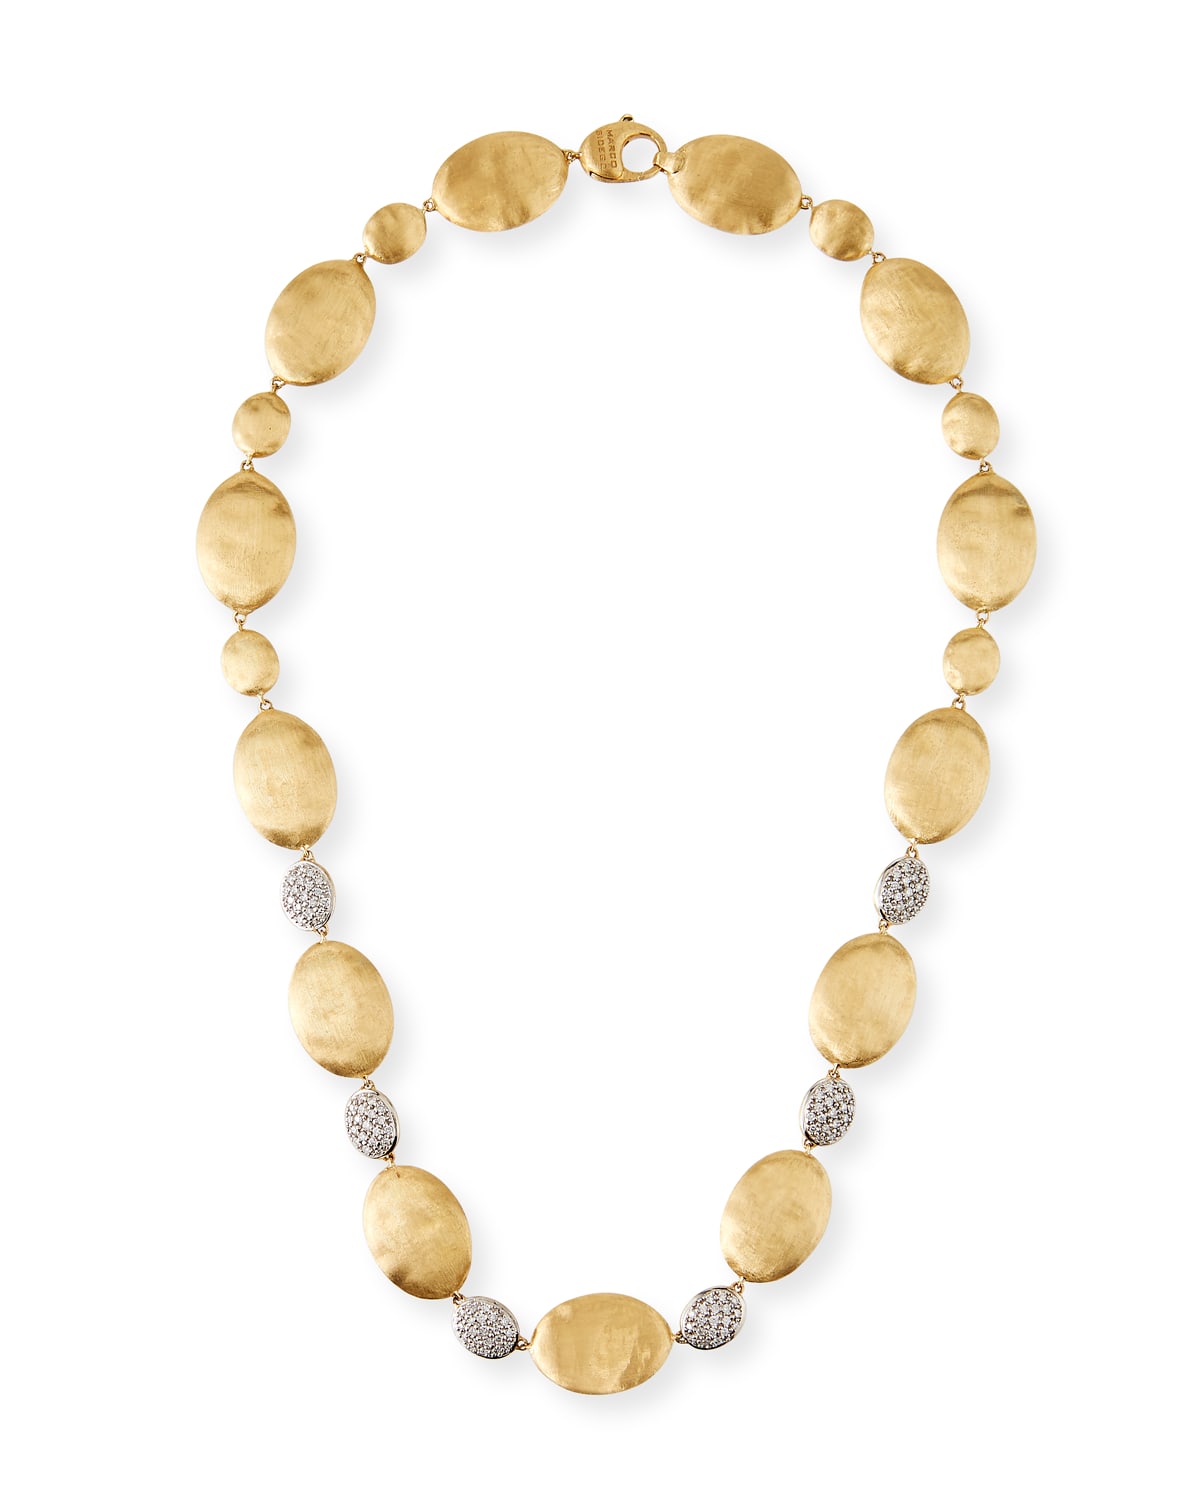 Marco Bicego Siviglia 18K Gold Short Small Bead Necklace, 16